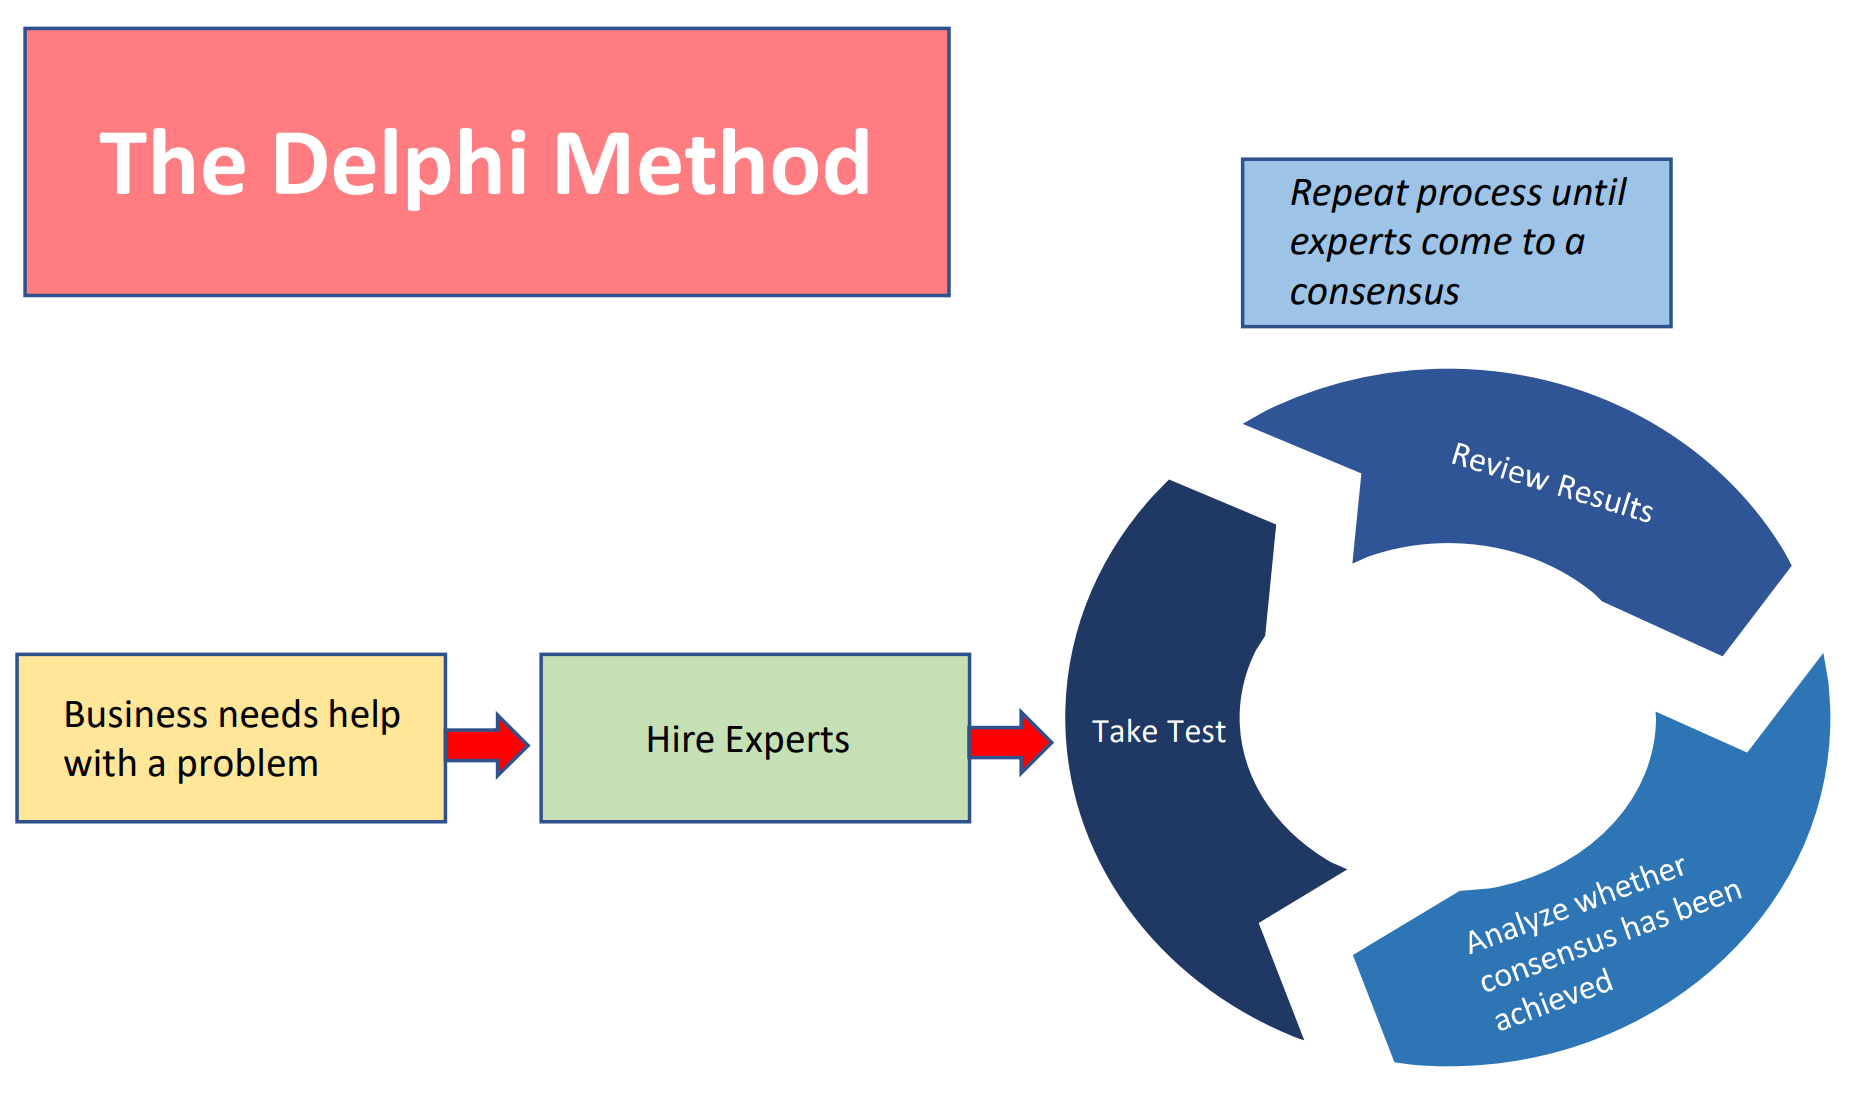 Types of models: The Delphi Method